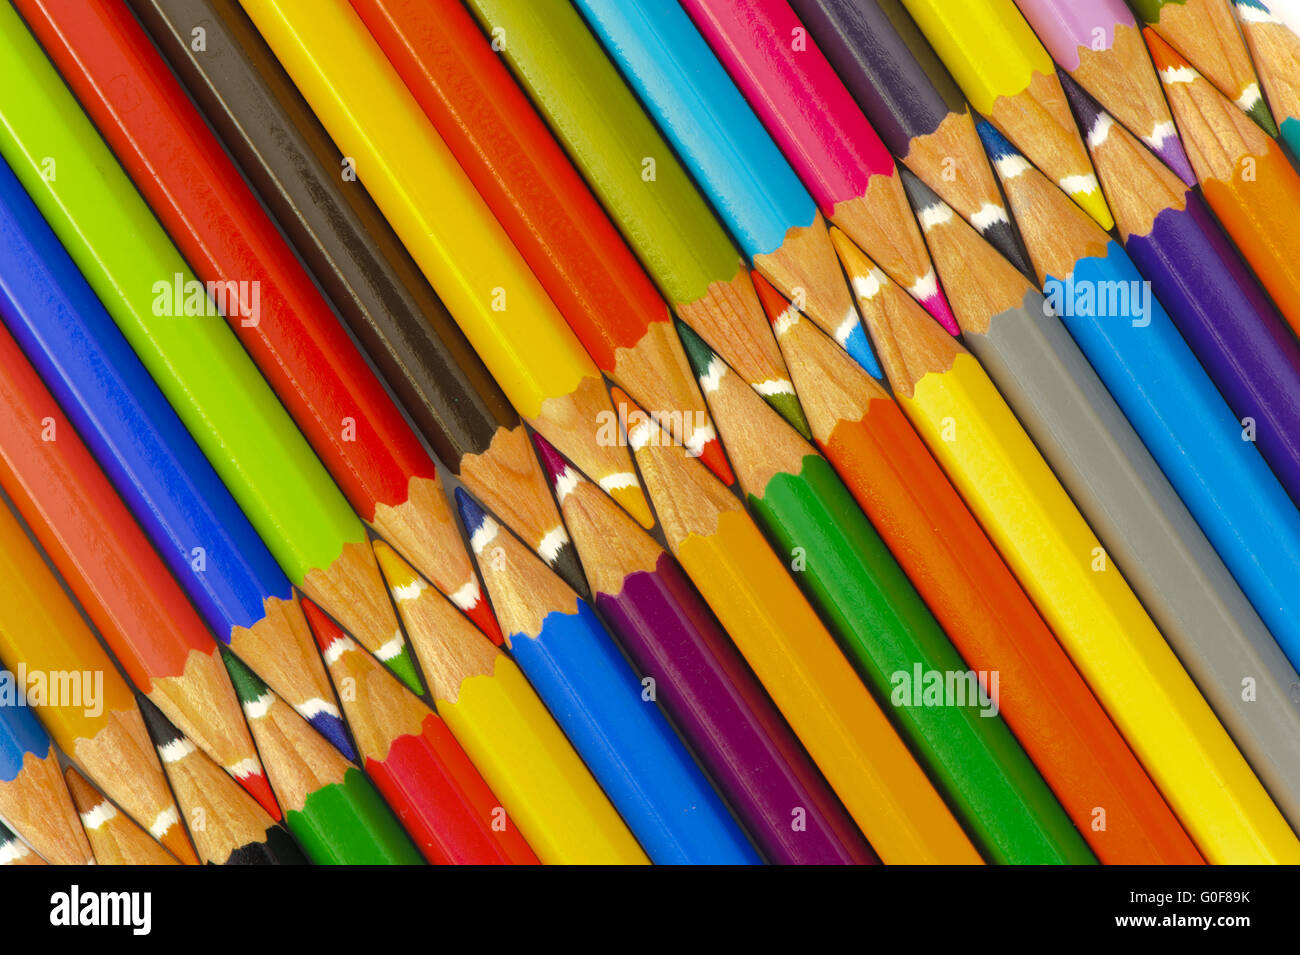 crayons show symbolic teamwork Stock Photo